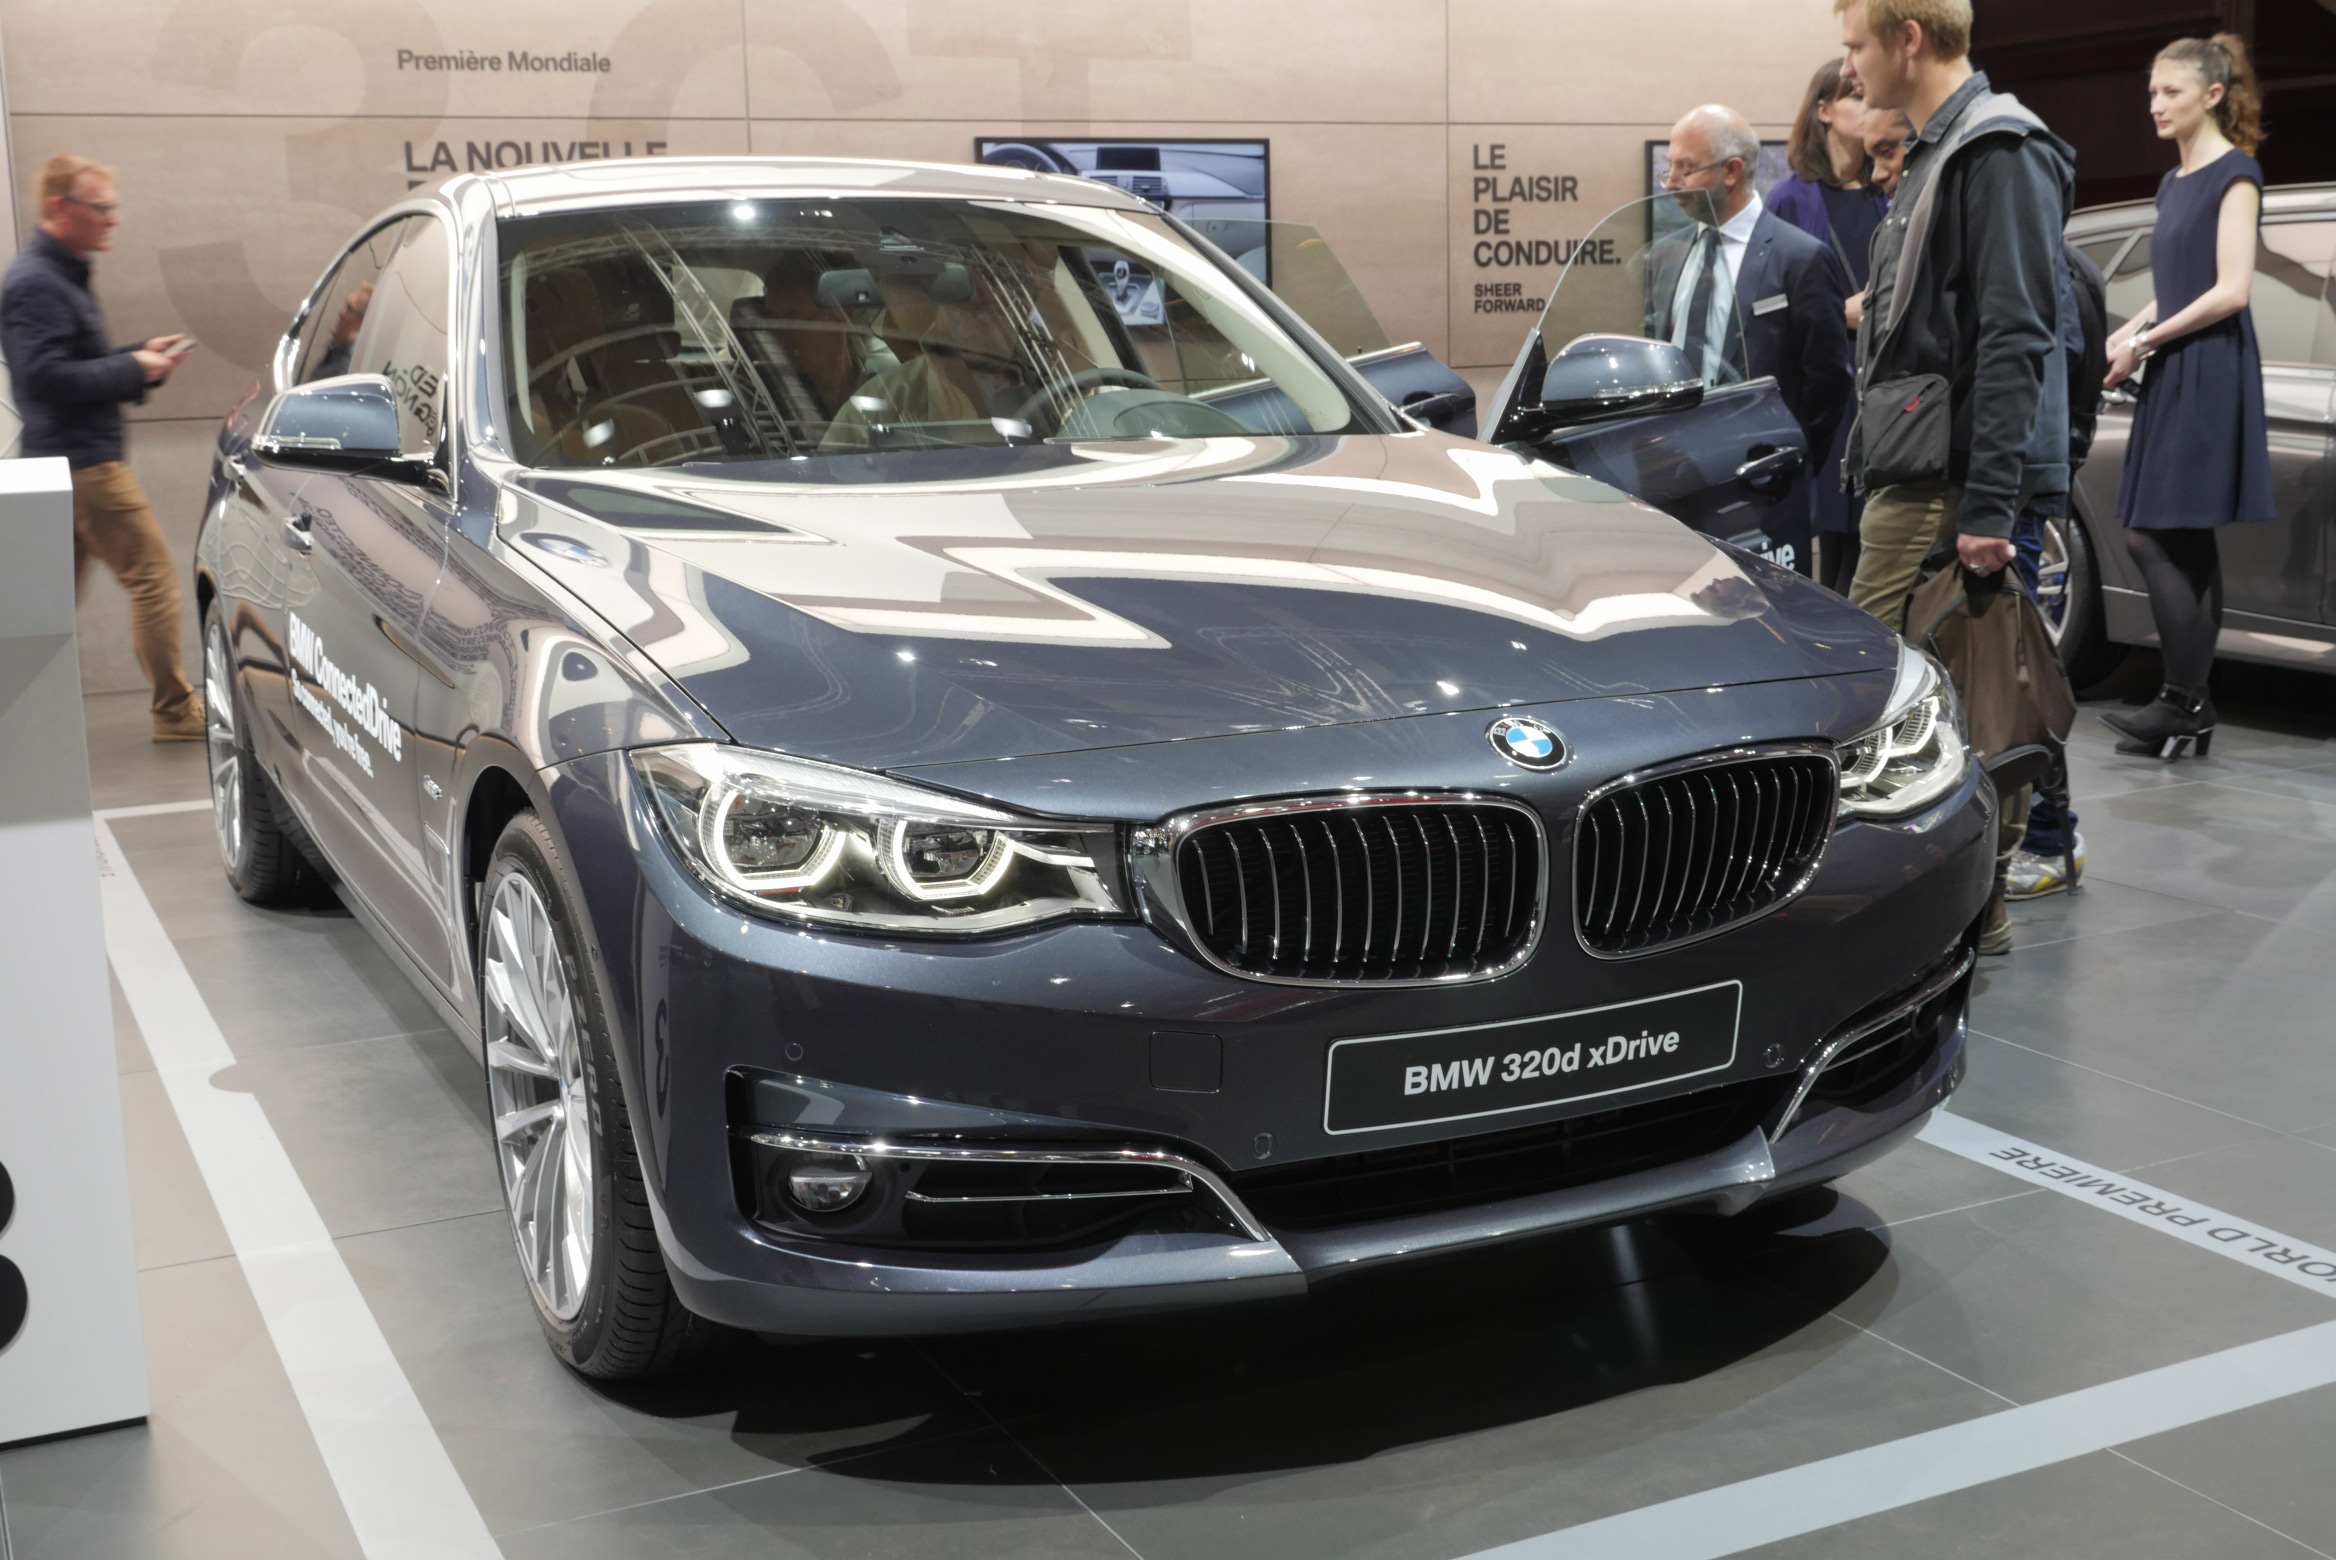 BMW 320d xDrive Paris Motor Show 2016